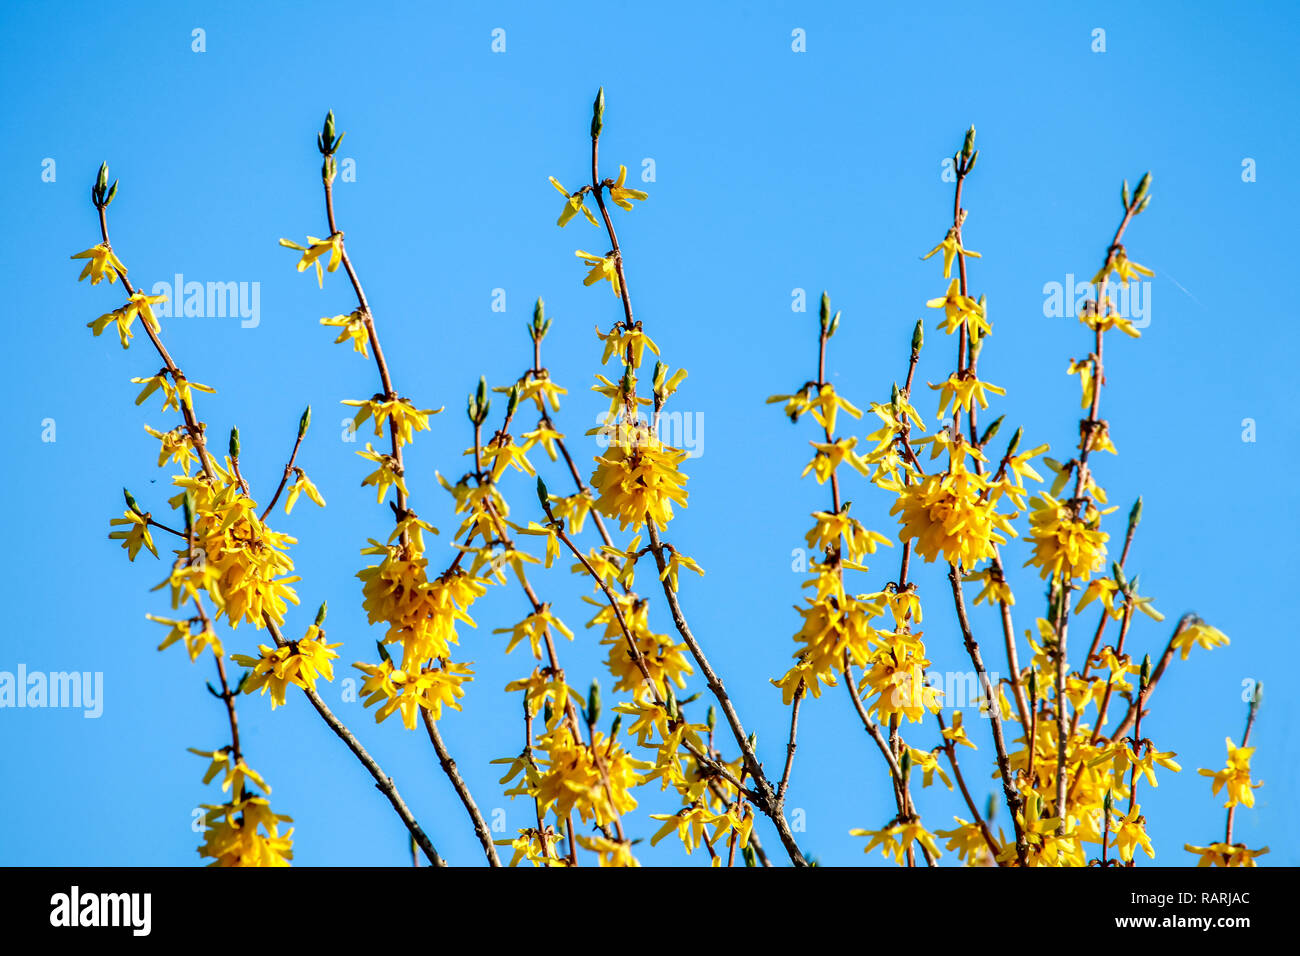 Yellow flower bush on blue sky background. Yellow flowers. Blooming flowers. Bush with yellow flowers. Wild flowers in Latvia. Nature flower. Stock Photo